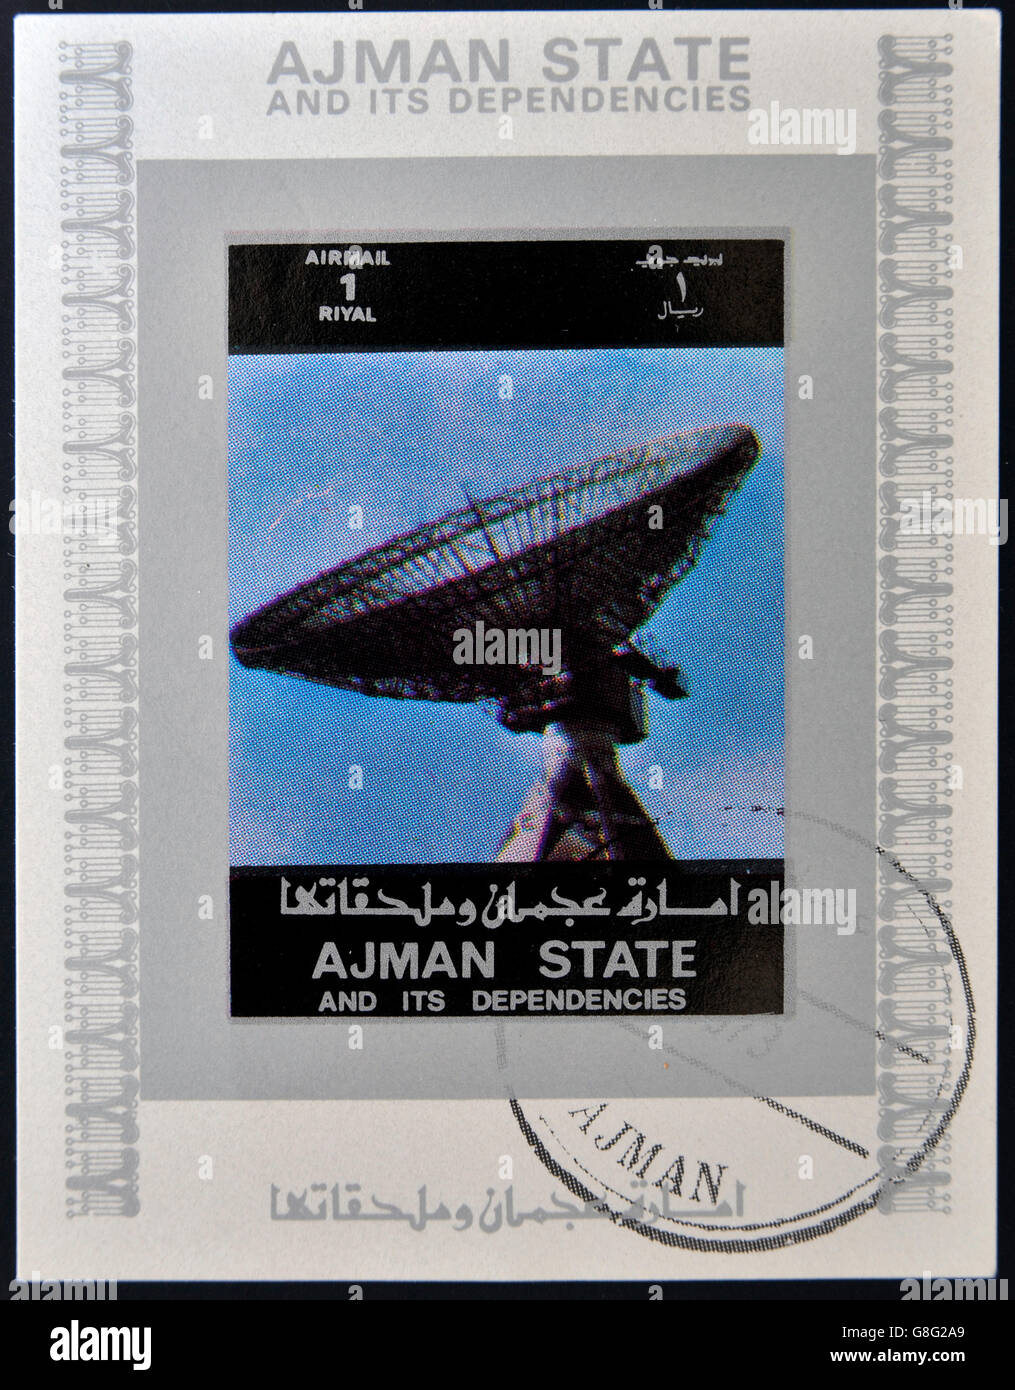 AJMAN STATE - CIRCA 1973: A stamp printed in United Arab Emirates (UAE) shows receiving antenna space, circa 1973 Stock Photo